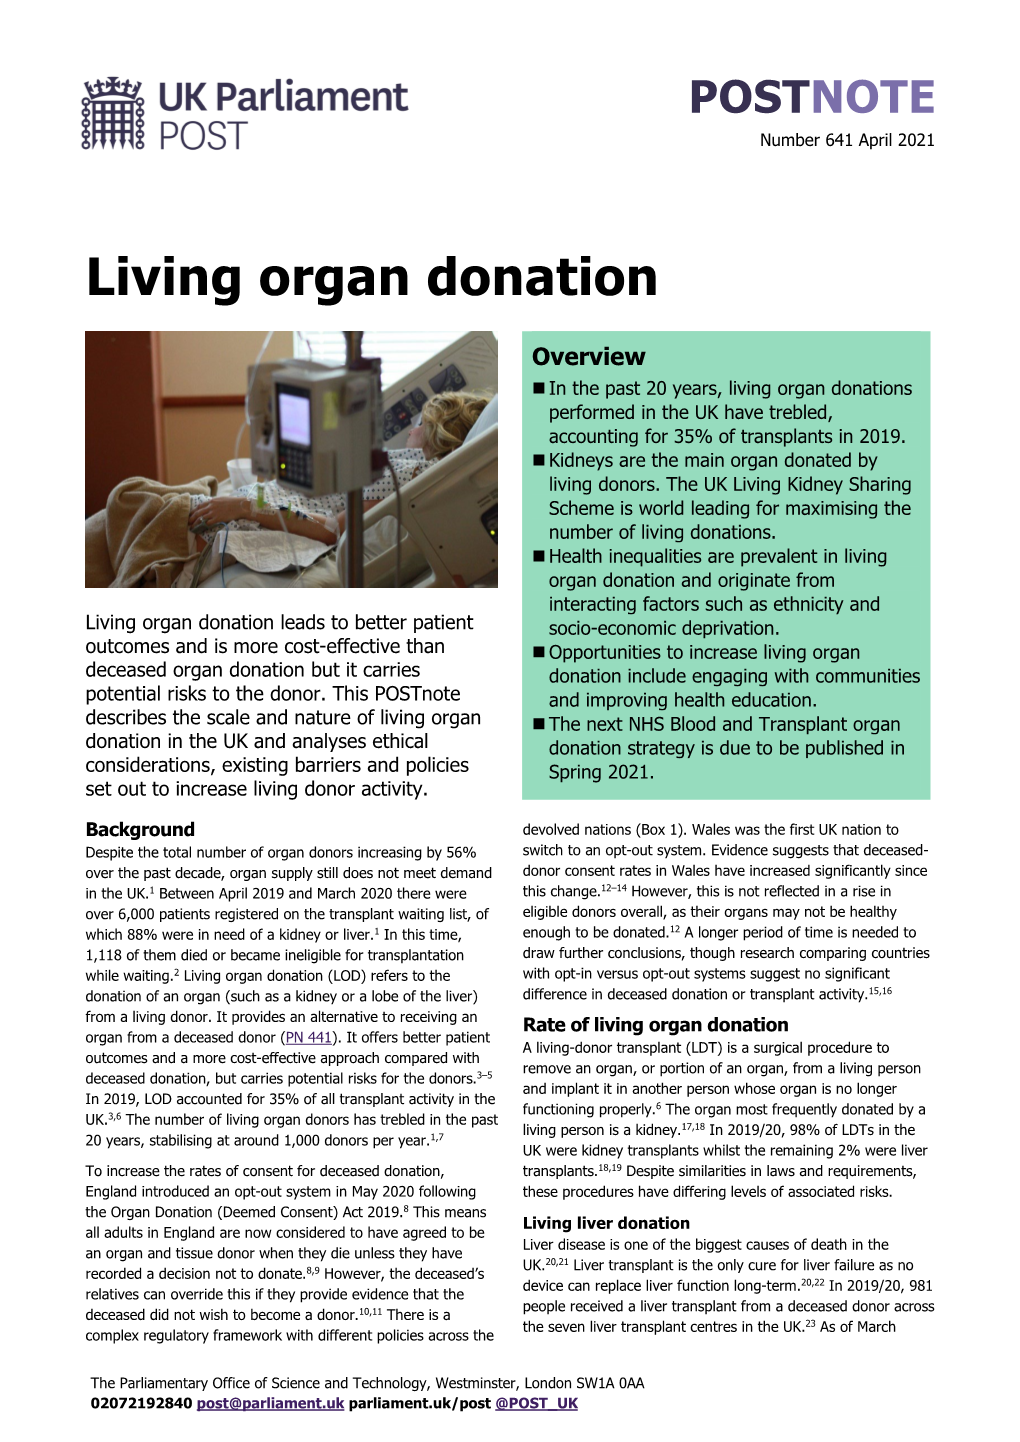 Living Organ Donation